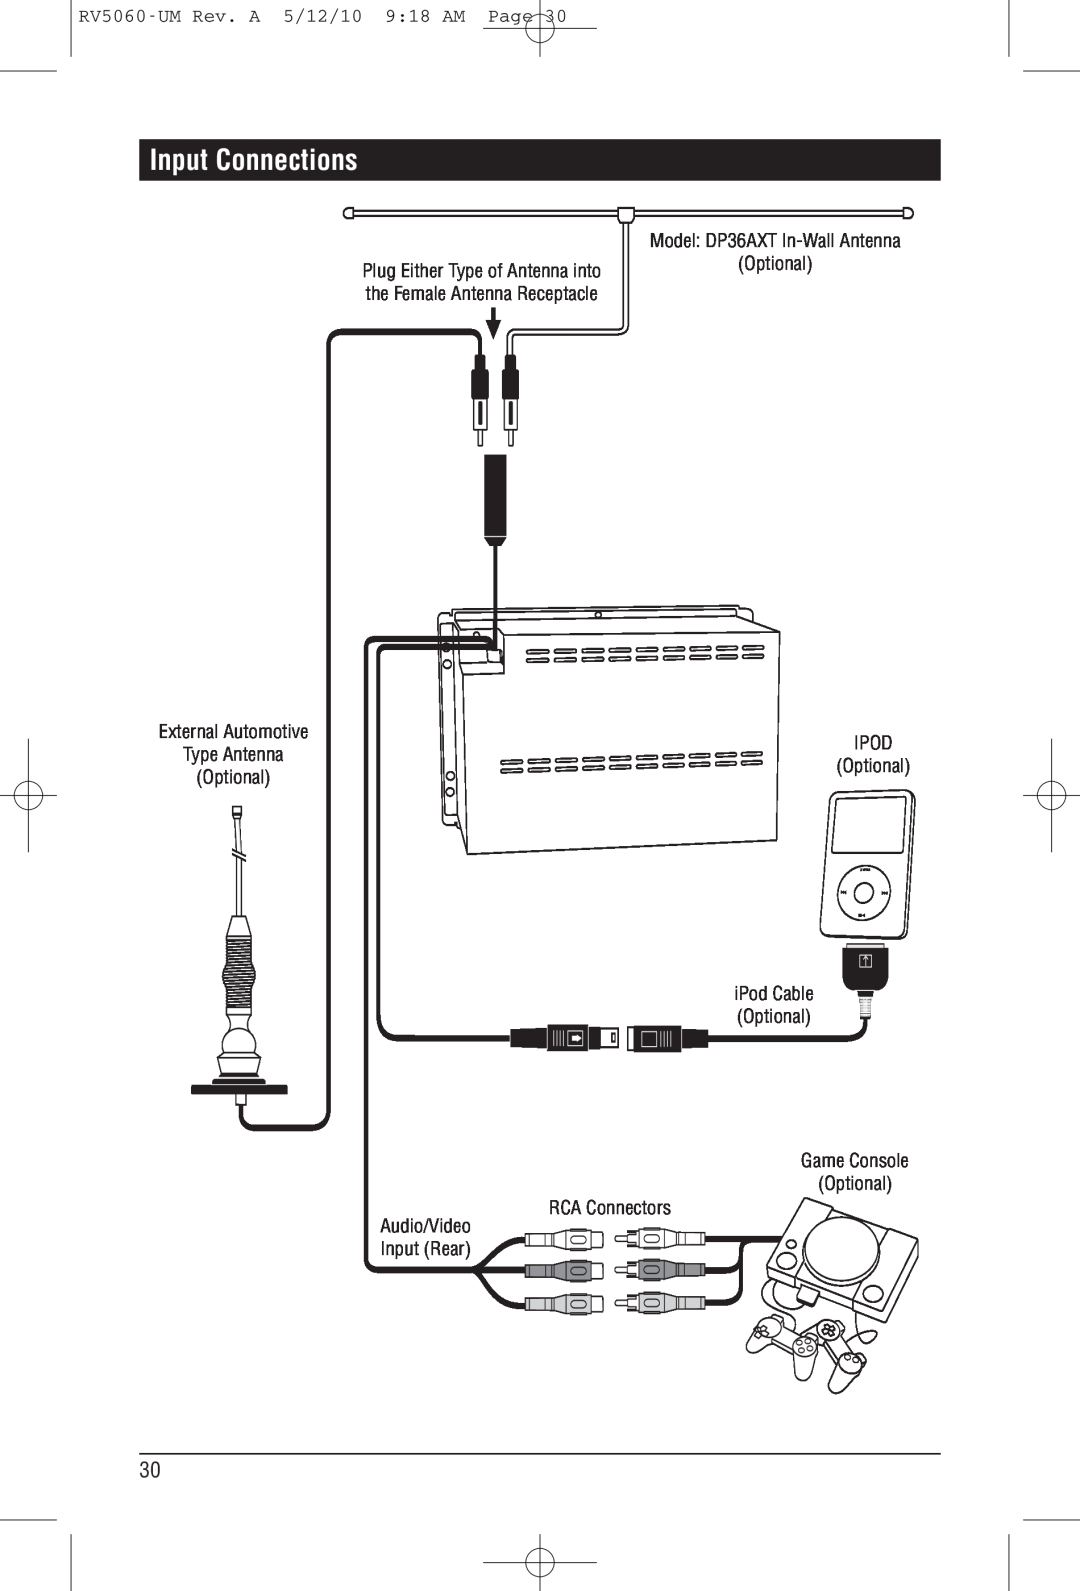 Linear Input Connections, RV5060-UMRev. A 5/12/10 9 18 AM Page, External Automotive Type Antenna Optional, Input Rear 